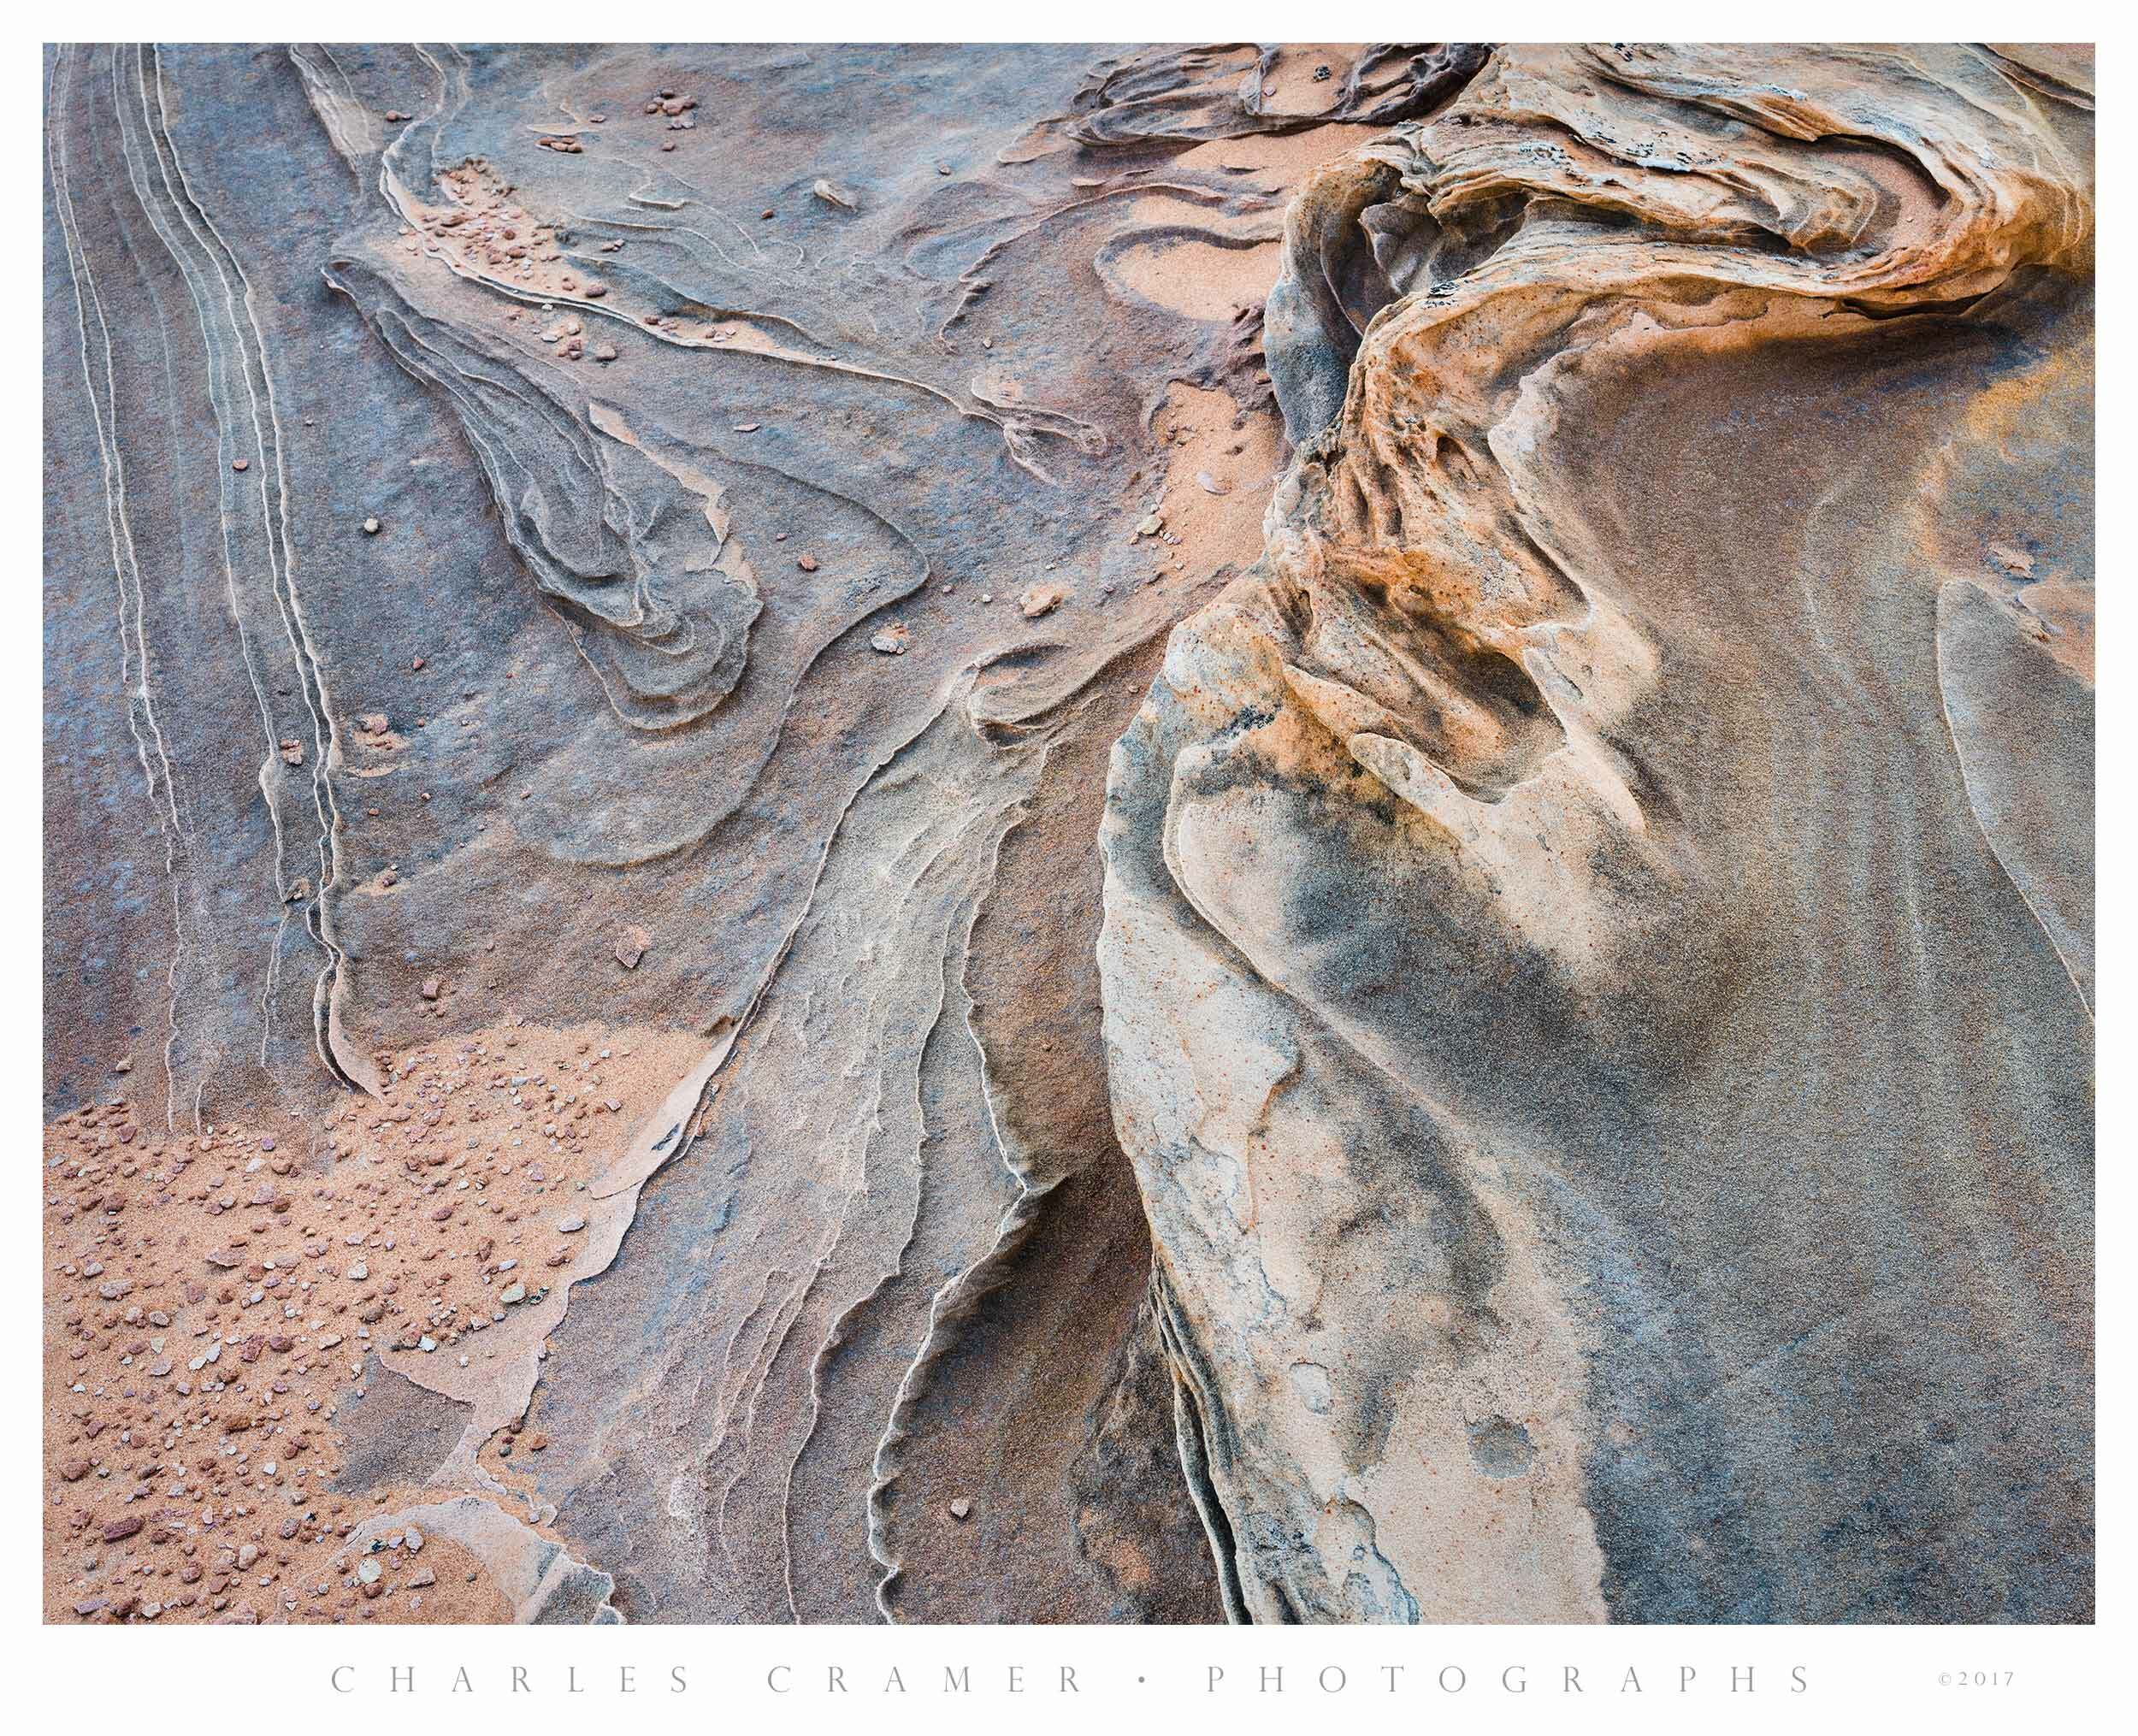 Eroded Sandstone Patterns, Paria Wilderness, Utah